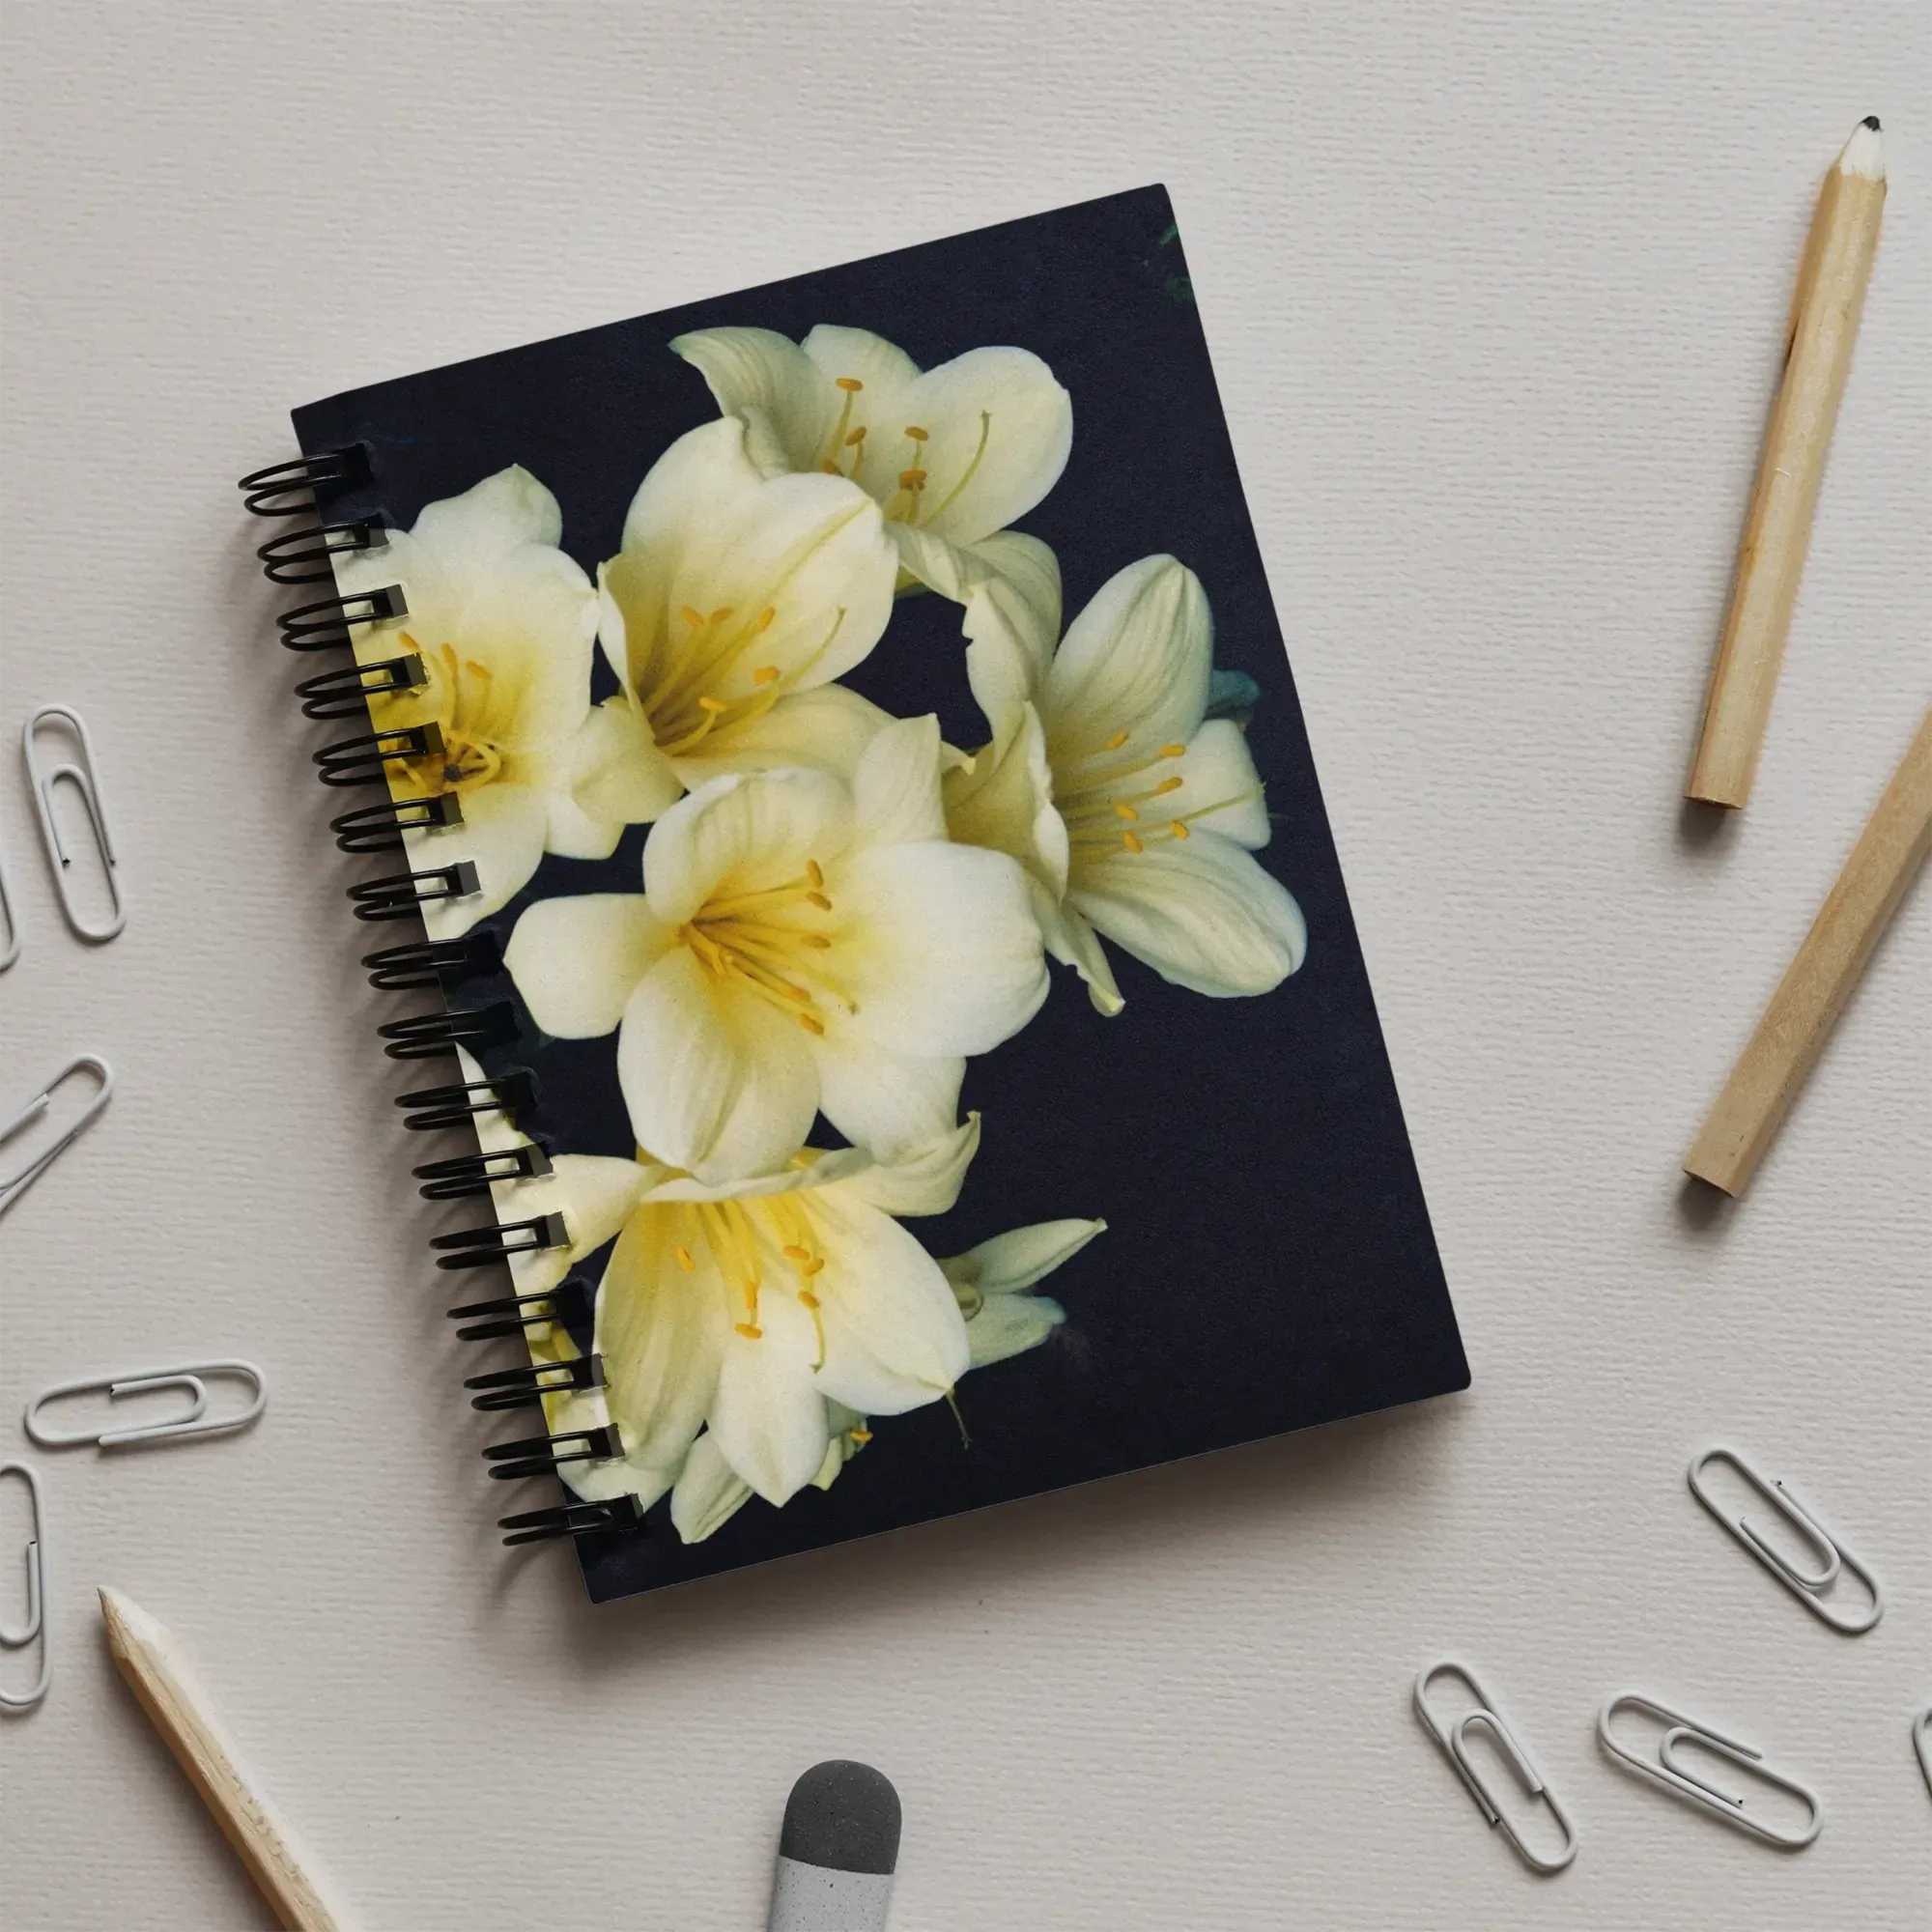 Flower Power Too Notebook - Yellow Clivia Miniata - Notebooks & Notepads - Aesthetic Art